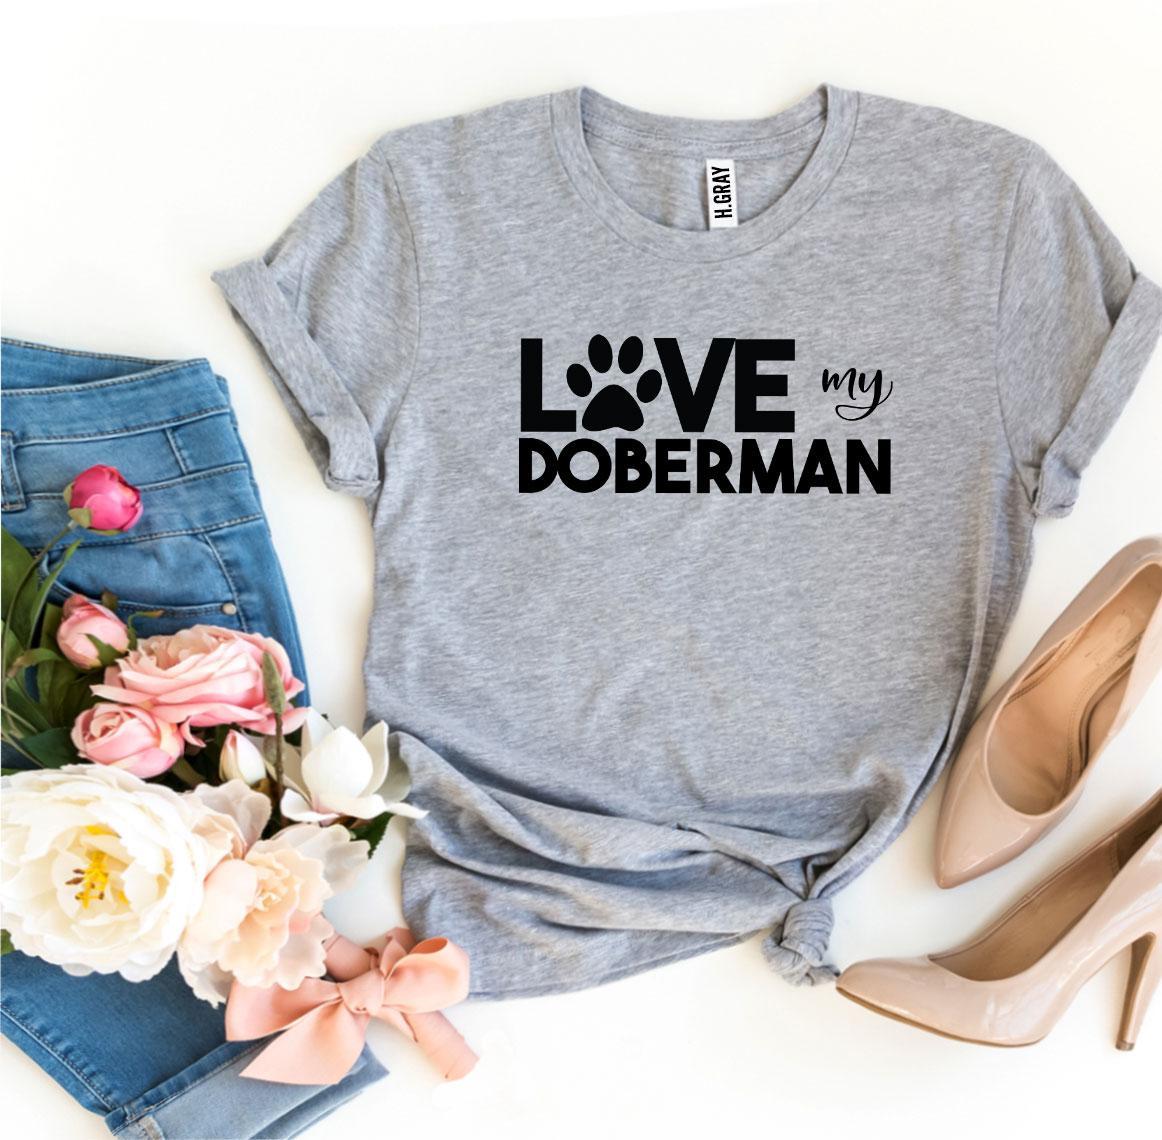 Love My Doberman T-Shirt - Furr Baby Gifts